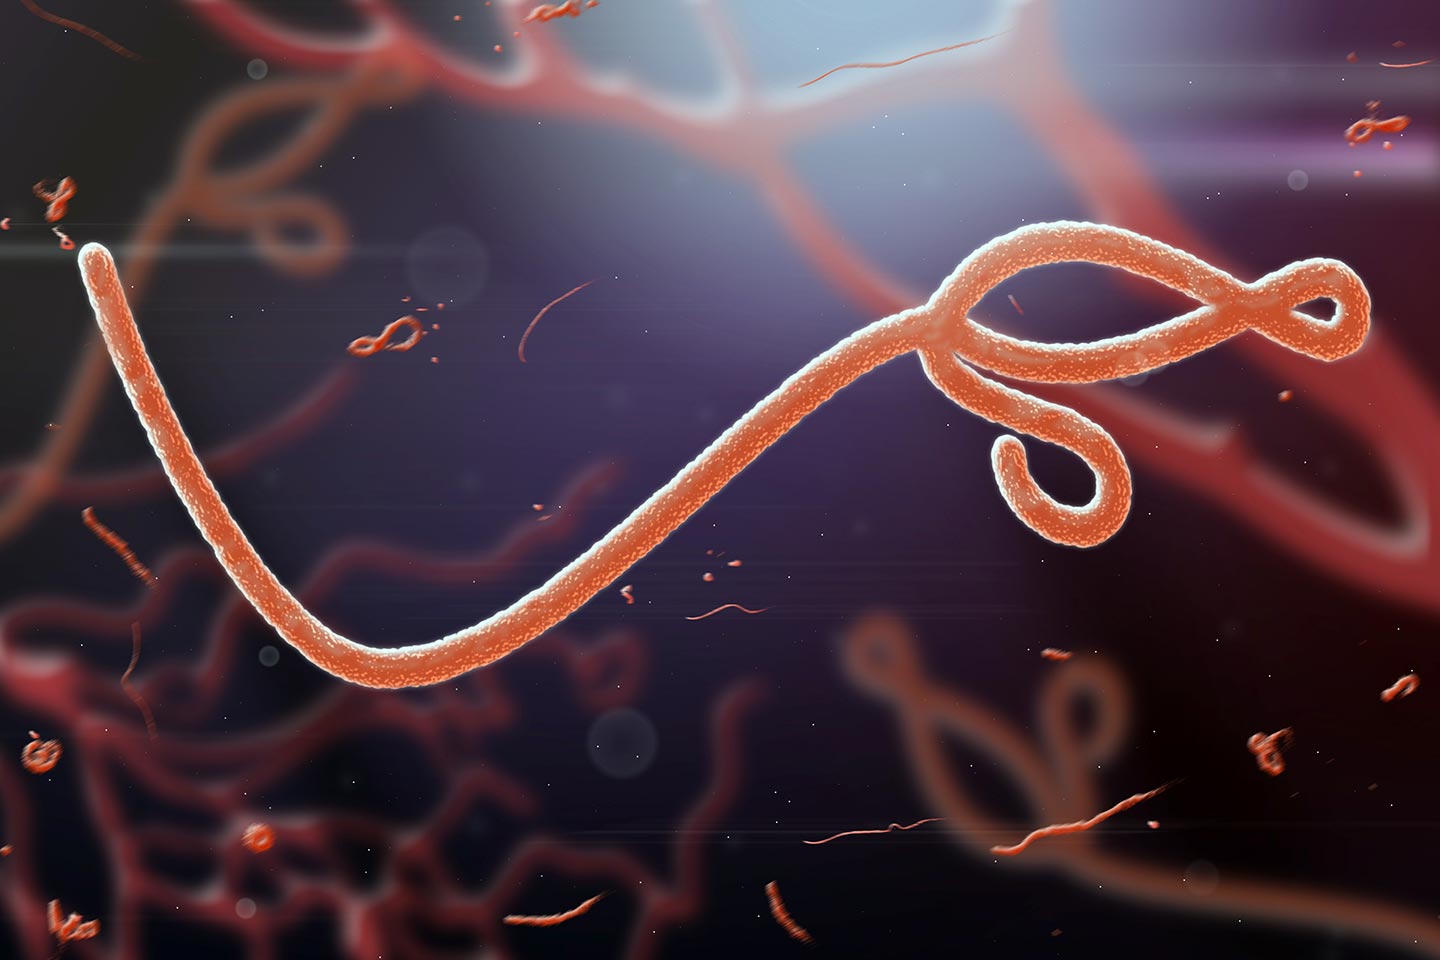 The next pandemic Ebola? Gavi, the Vaccine Alliance